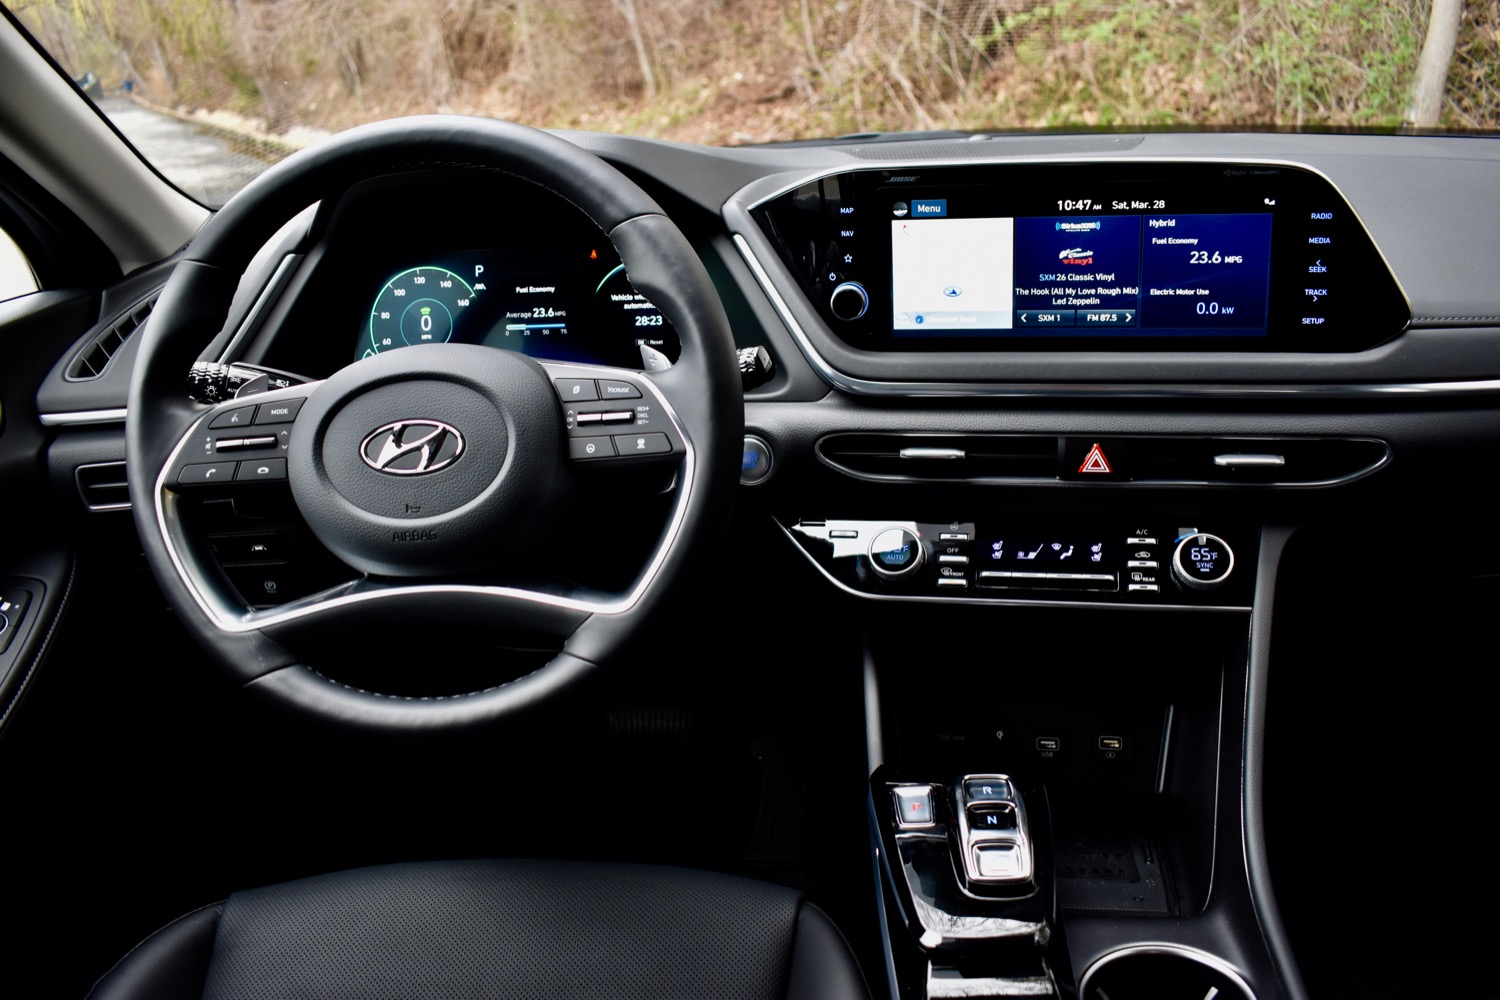 2020 Hyundai Sonata First Drive Review: Chase The Sun | Digital Trends